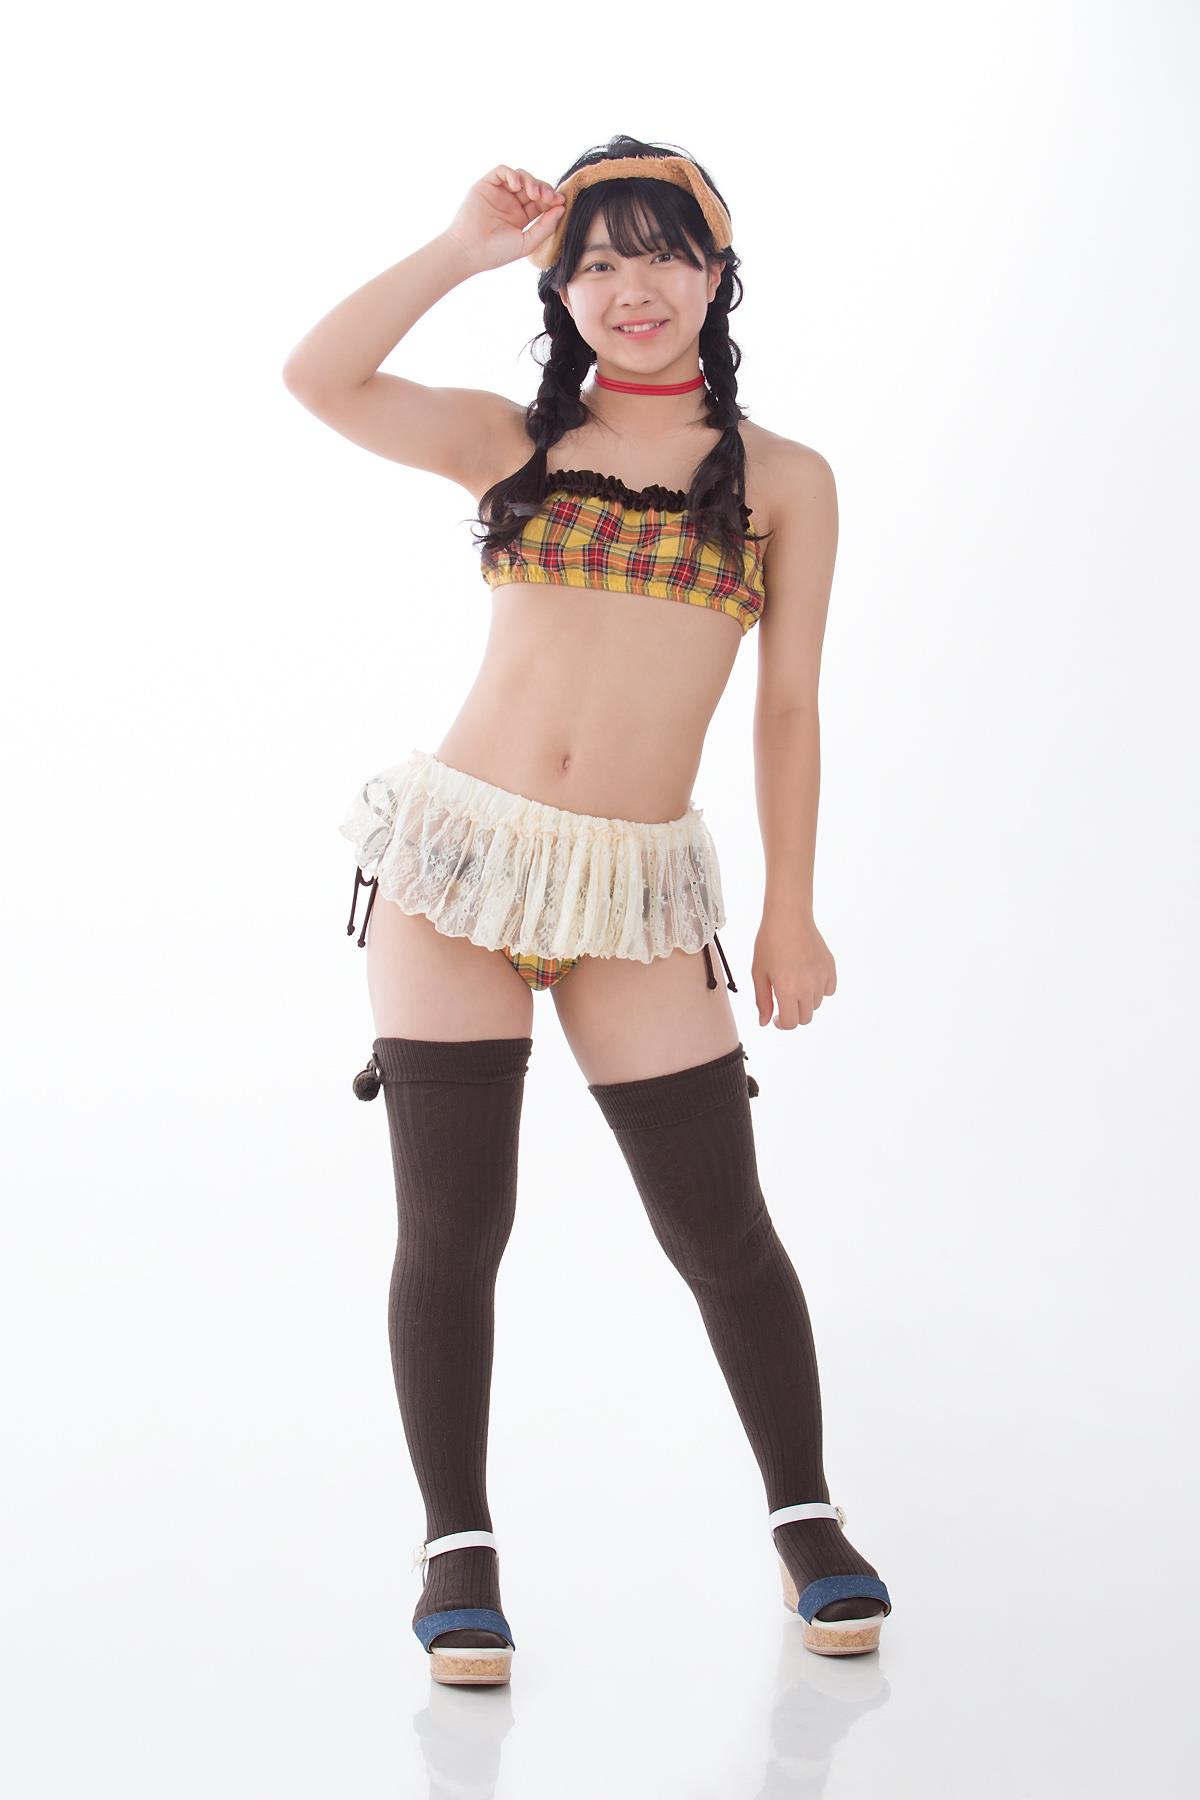 Minisuka.tv Saria Natsume 夏目咲莉愛 - Premium Gallery 2.5 - 19.jpg